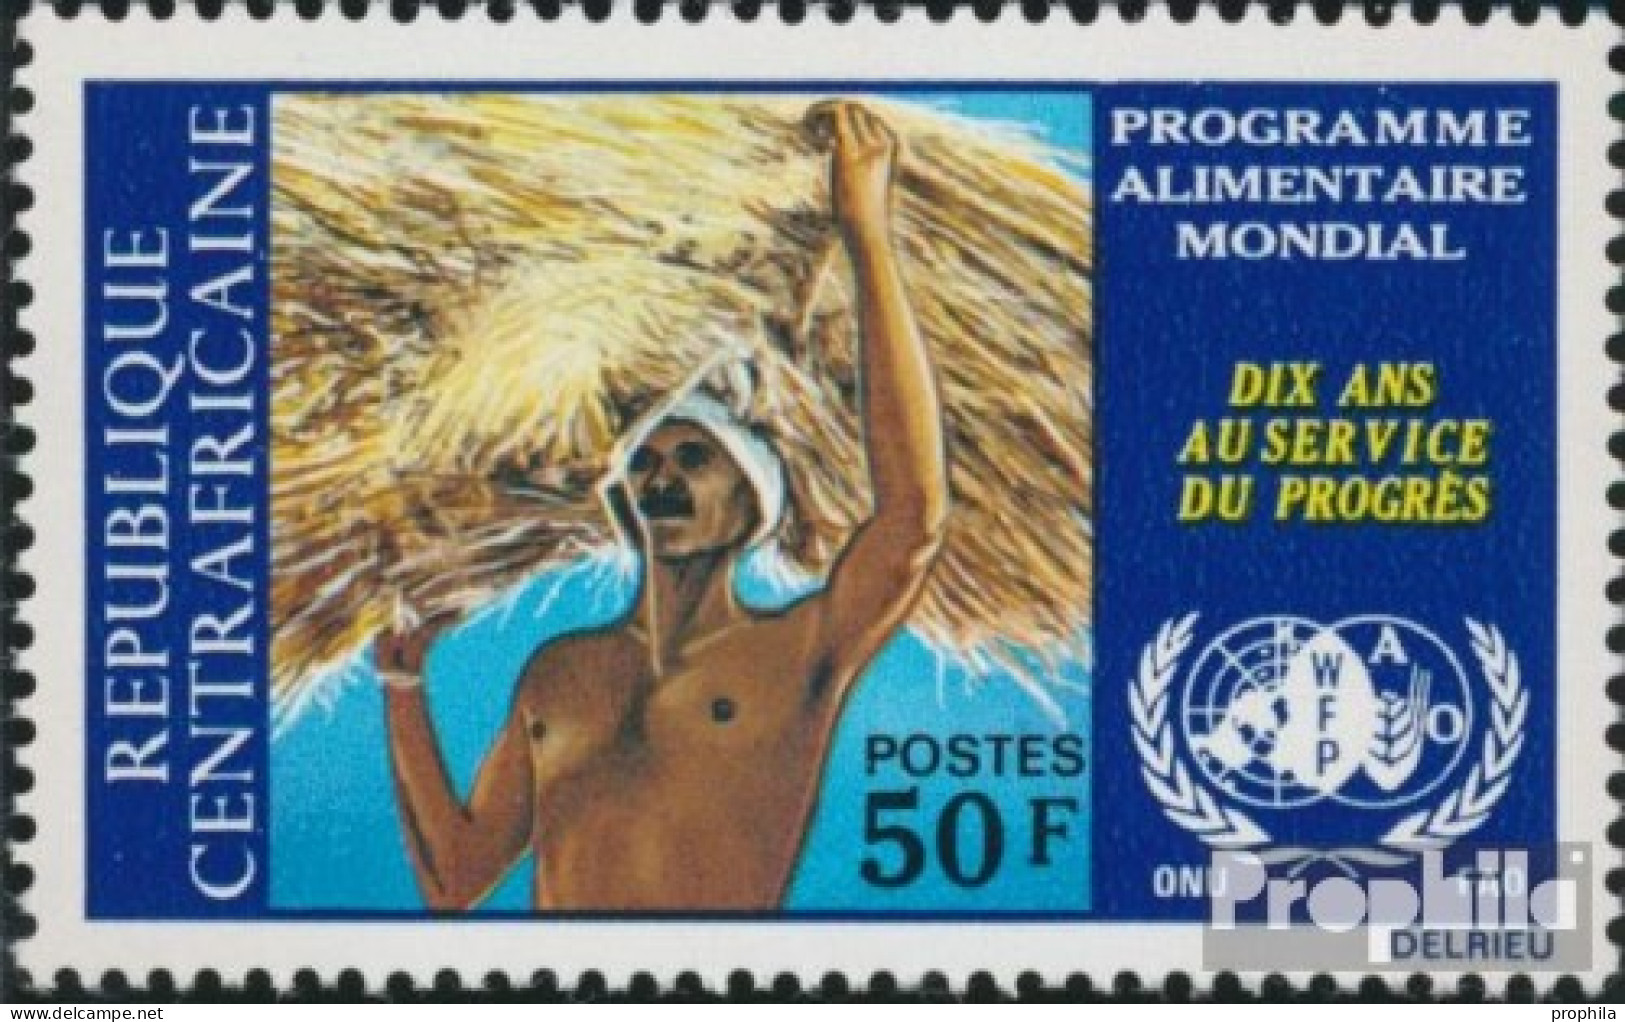 Zentralafrikanische Republik 311 (kompl.Ausg.) Postfrisch 1973 Welternährungsprogramm - Repubblica Centroafricana